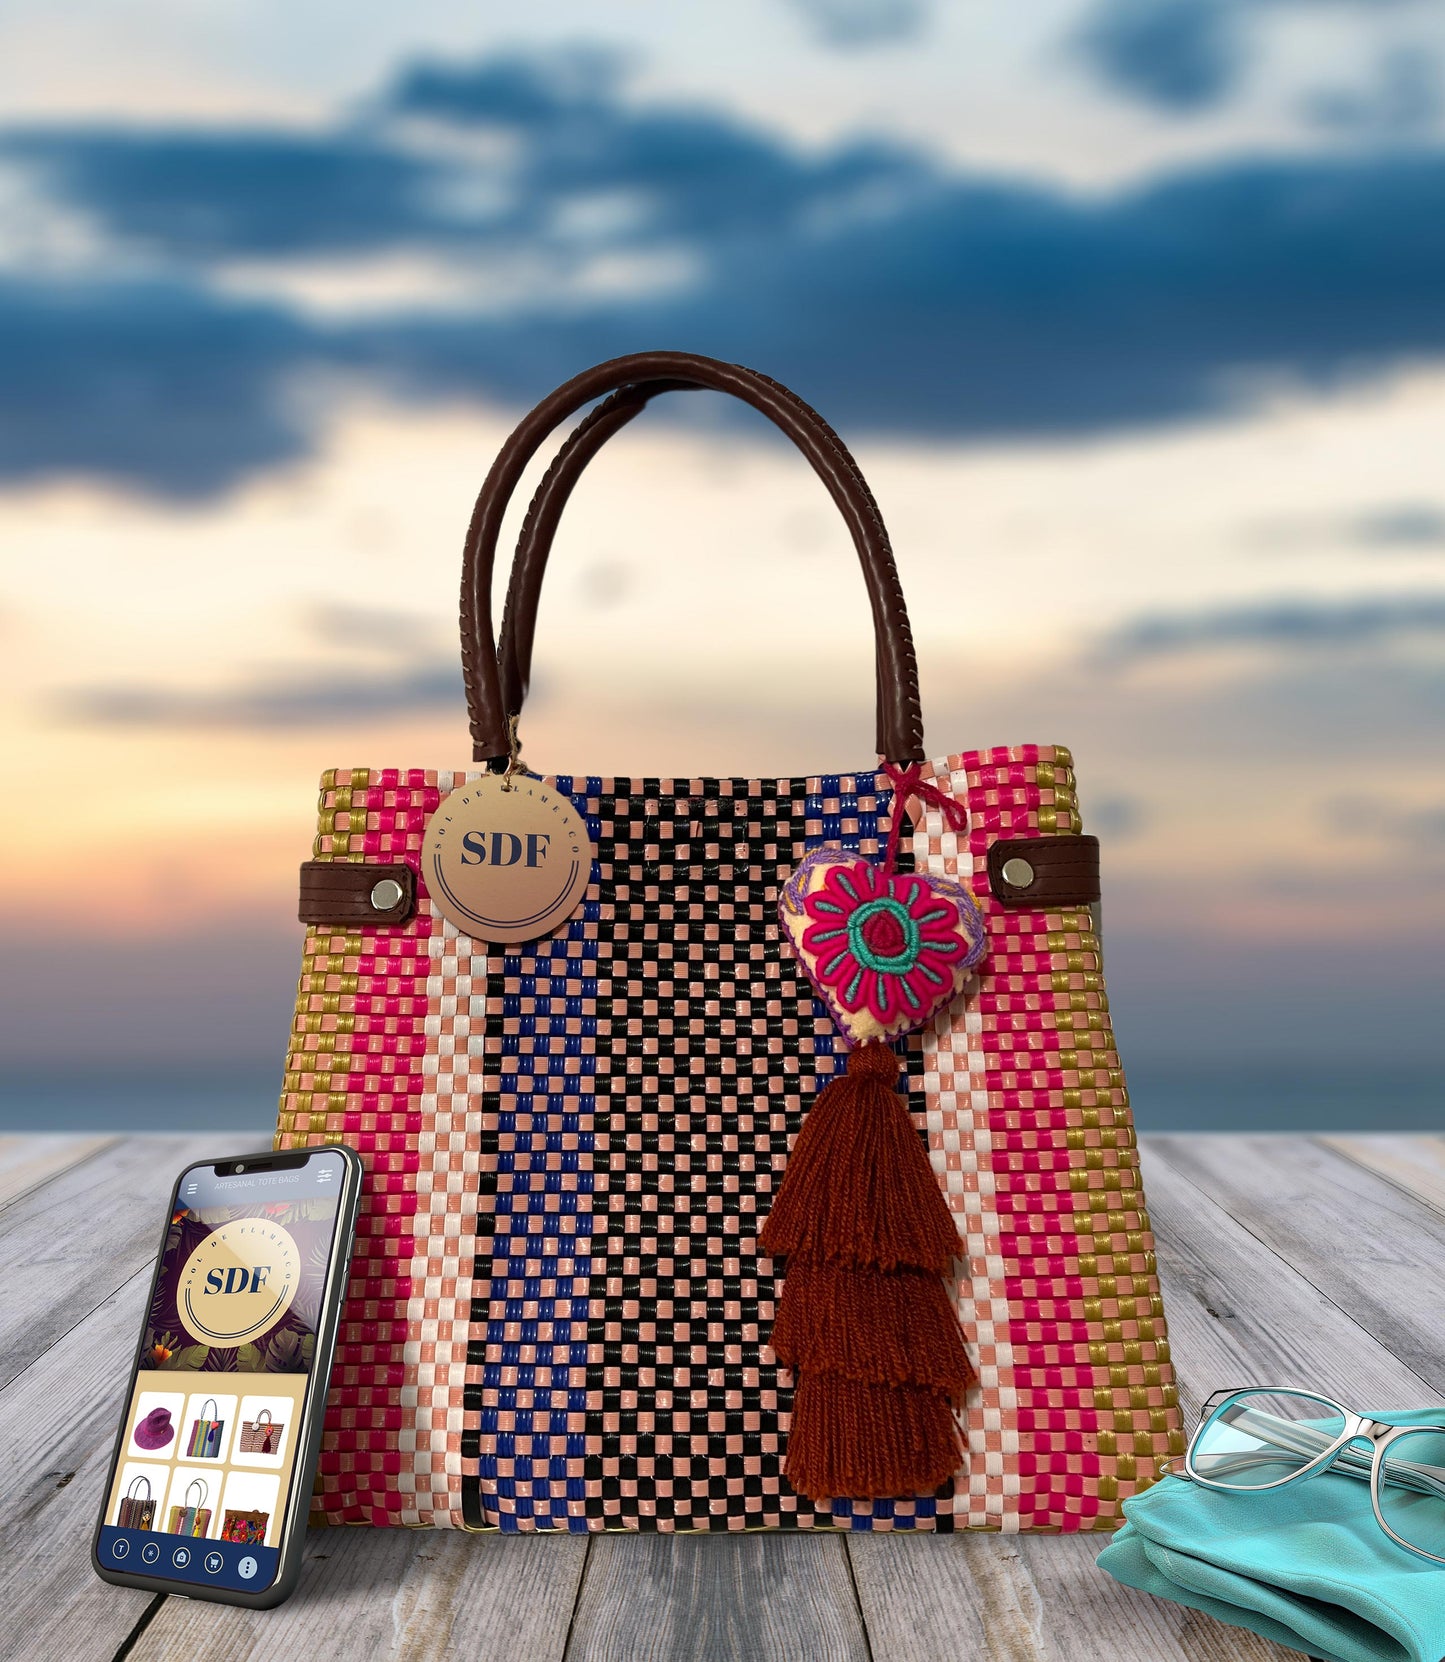 All Purpose Bag - Women's Beach Bag, Purse, Handbag, Cosmetic Pouch without Tassel